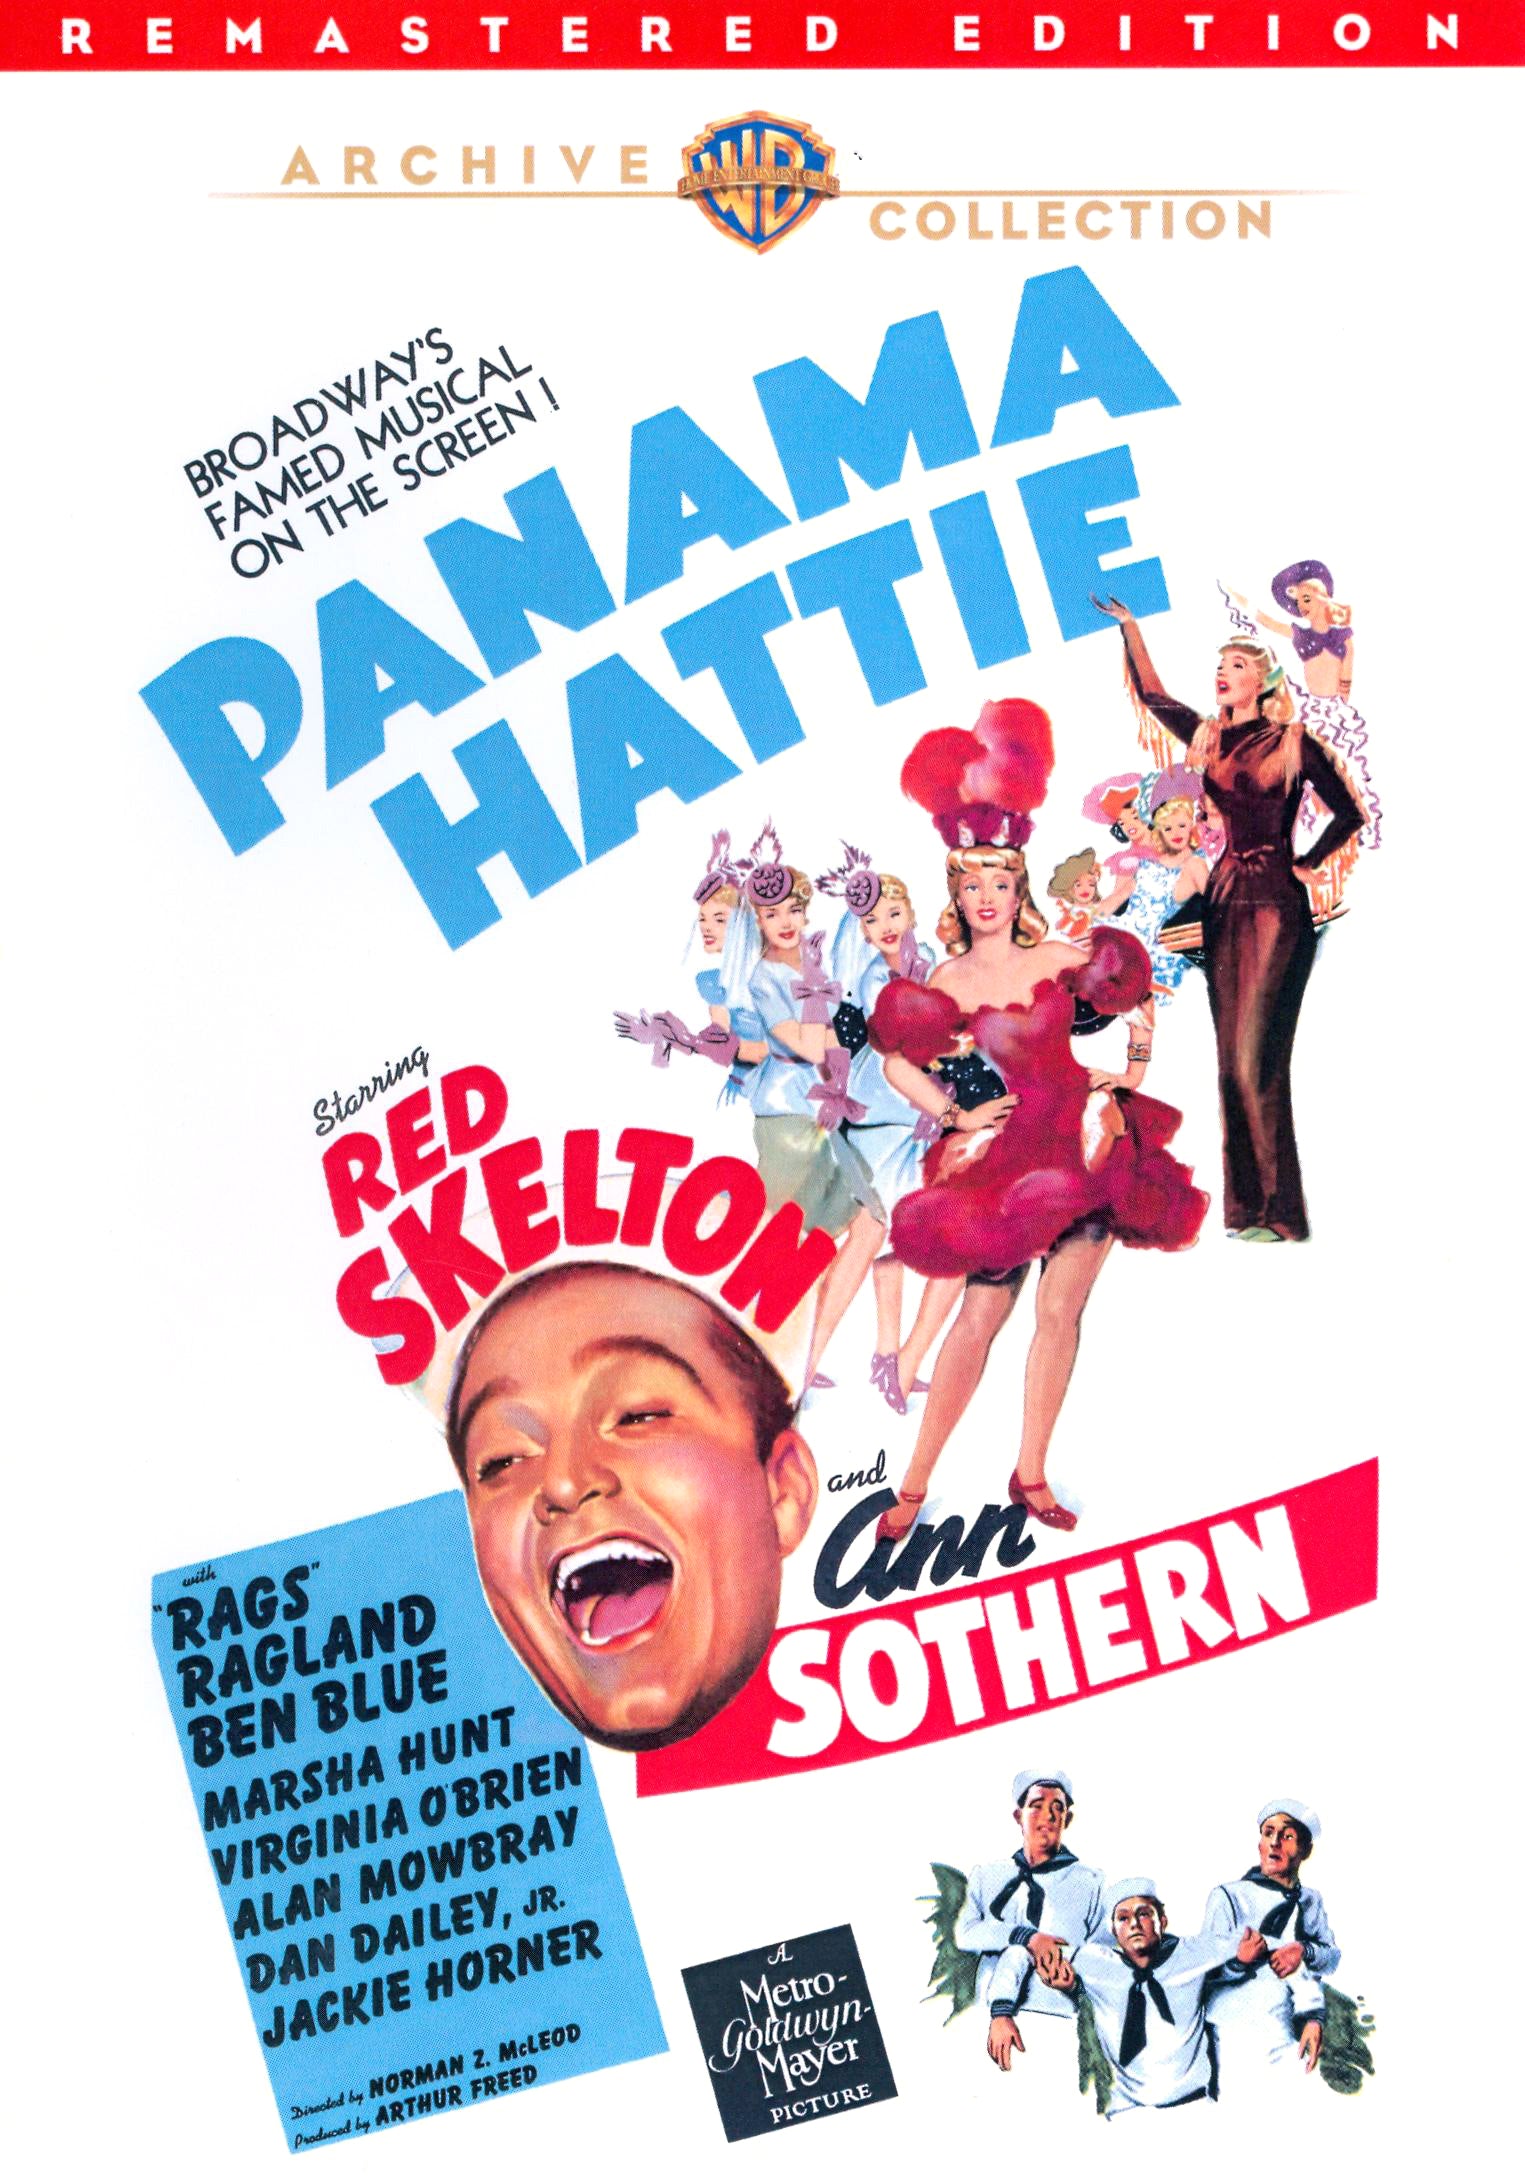 Panama Hattie cover art